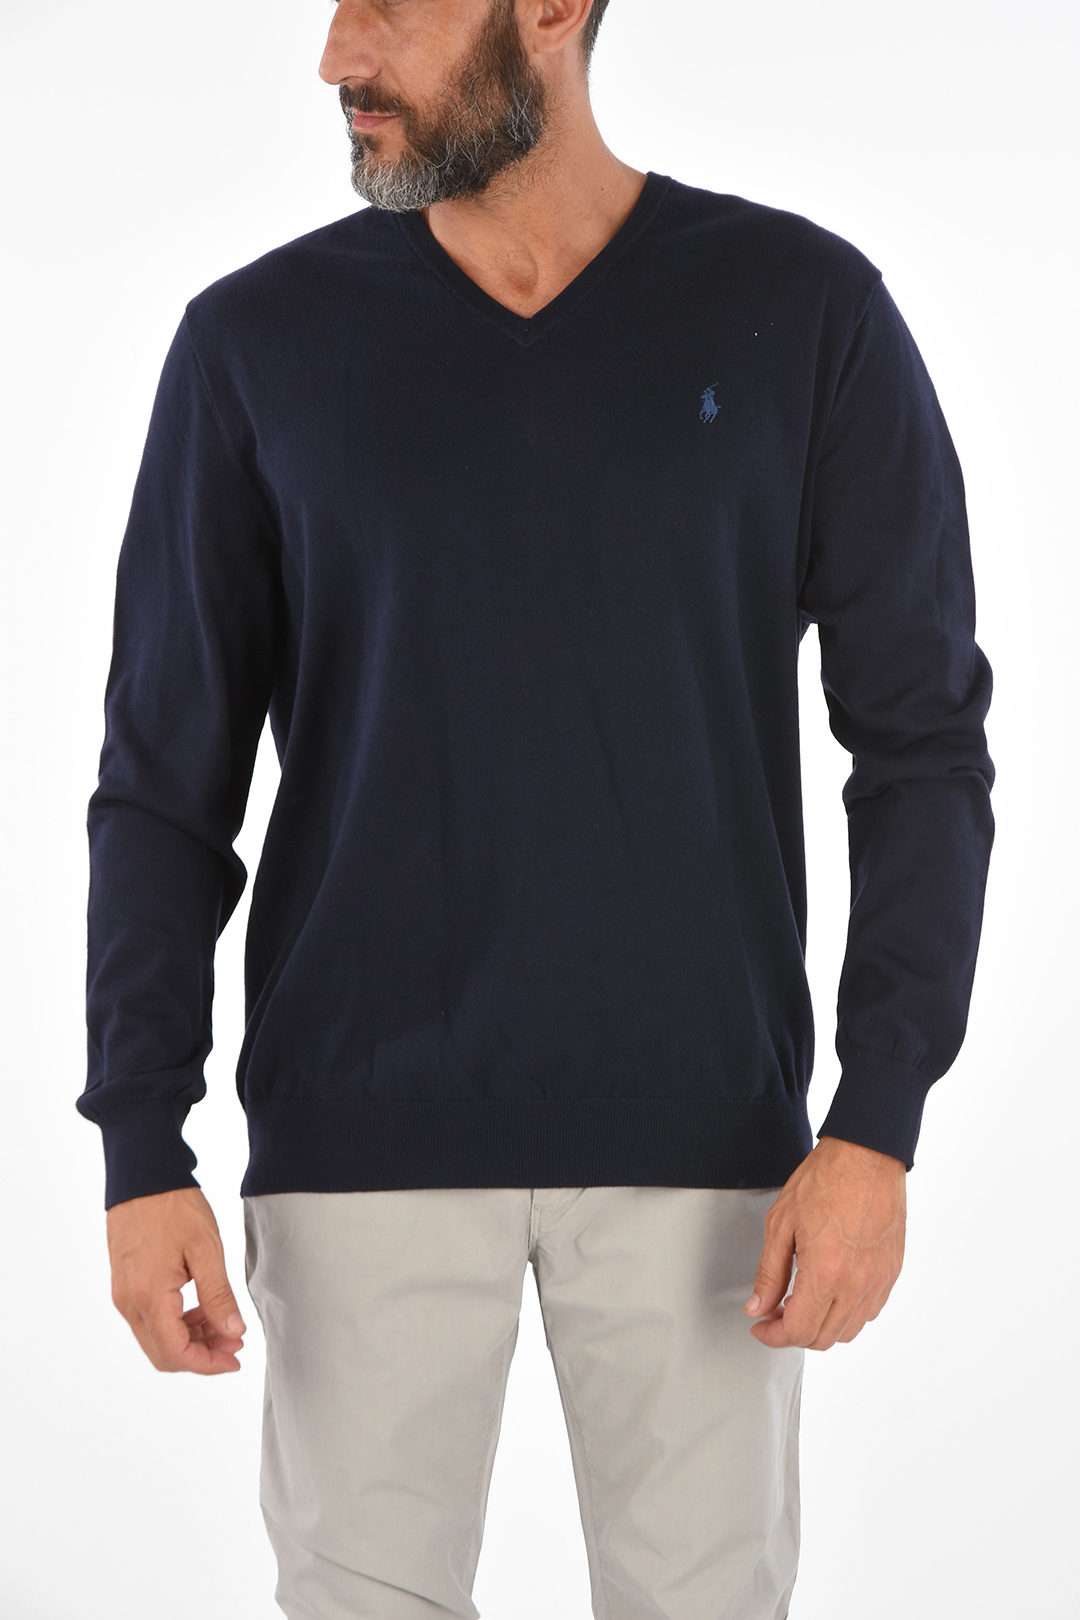 Ralph Lauren POLO Cotton Slim Fit V-Neck Sweater men - Glamood Outlet